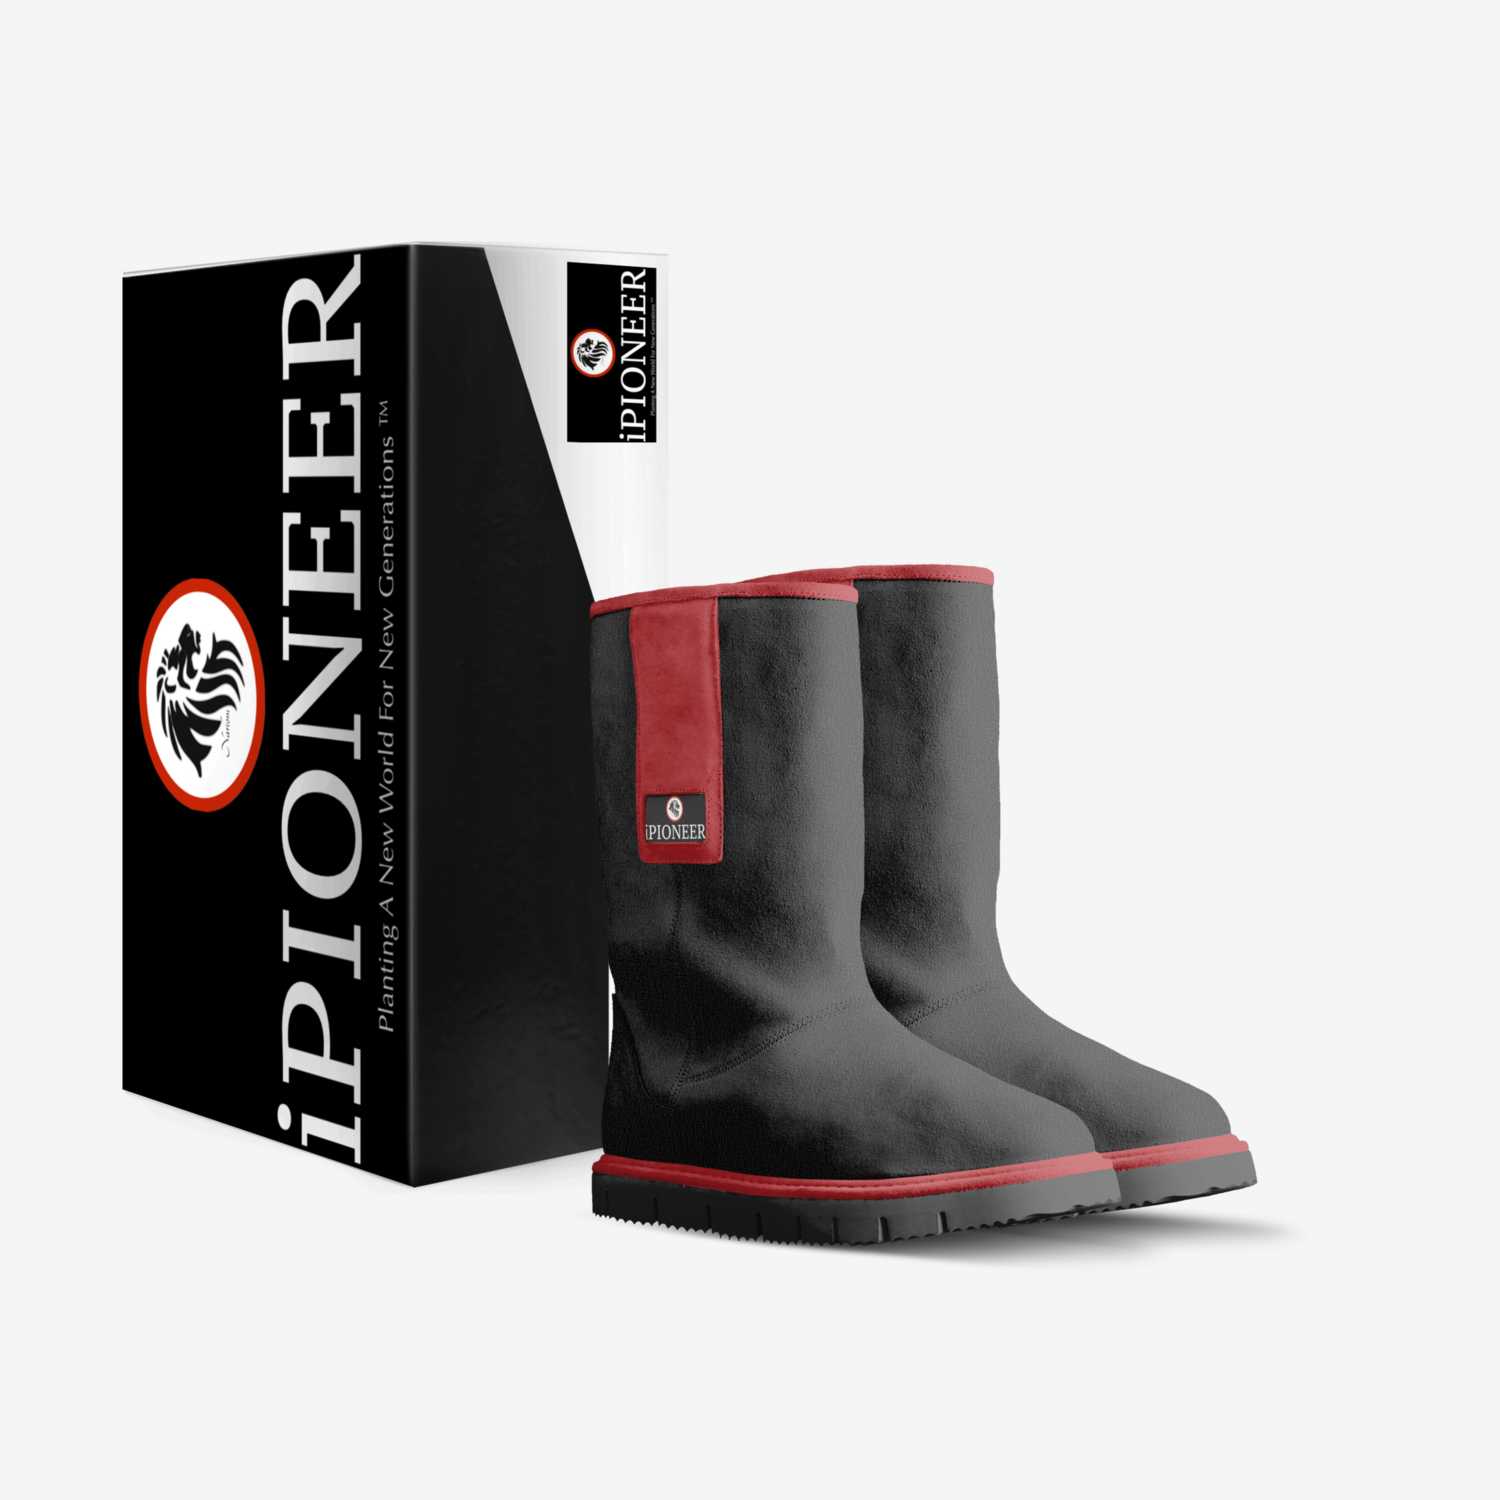 iPioneerPrettyGirl custom made in Italy shoes by Marlon D. Hester Sr. | Box view